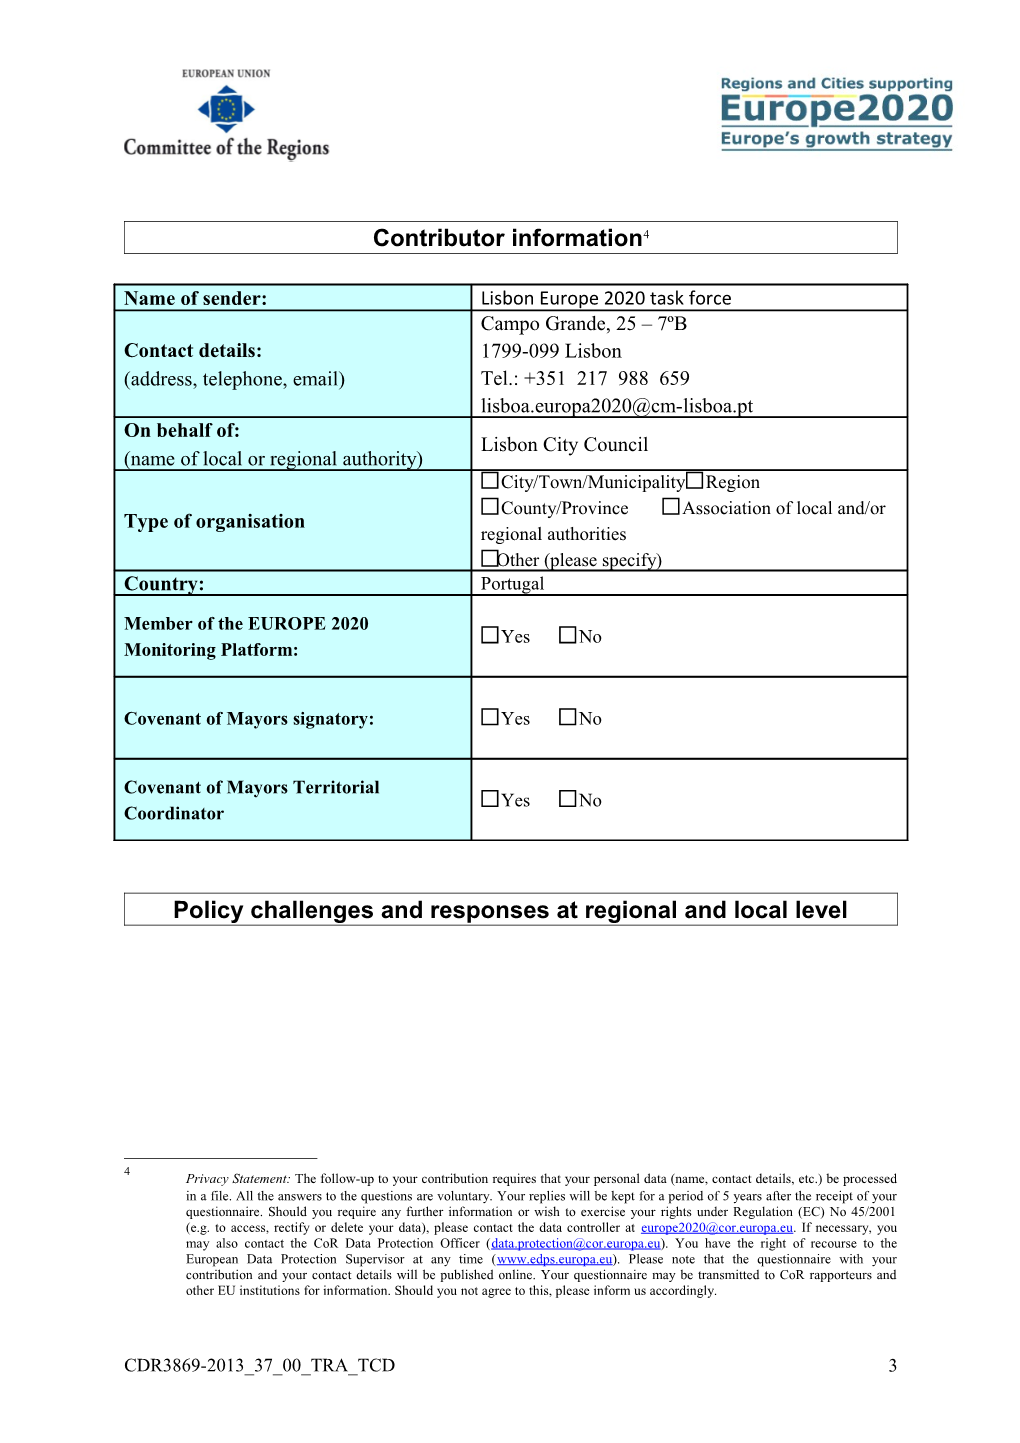 Resource Efficent Europe Survey, Answers from Municipality of Lisbon City Council (Câmara